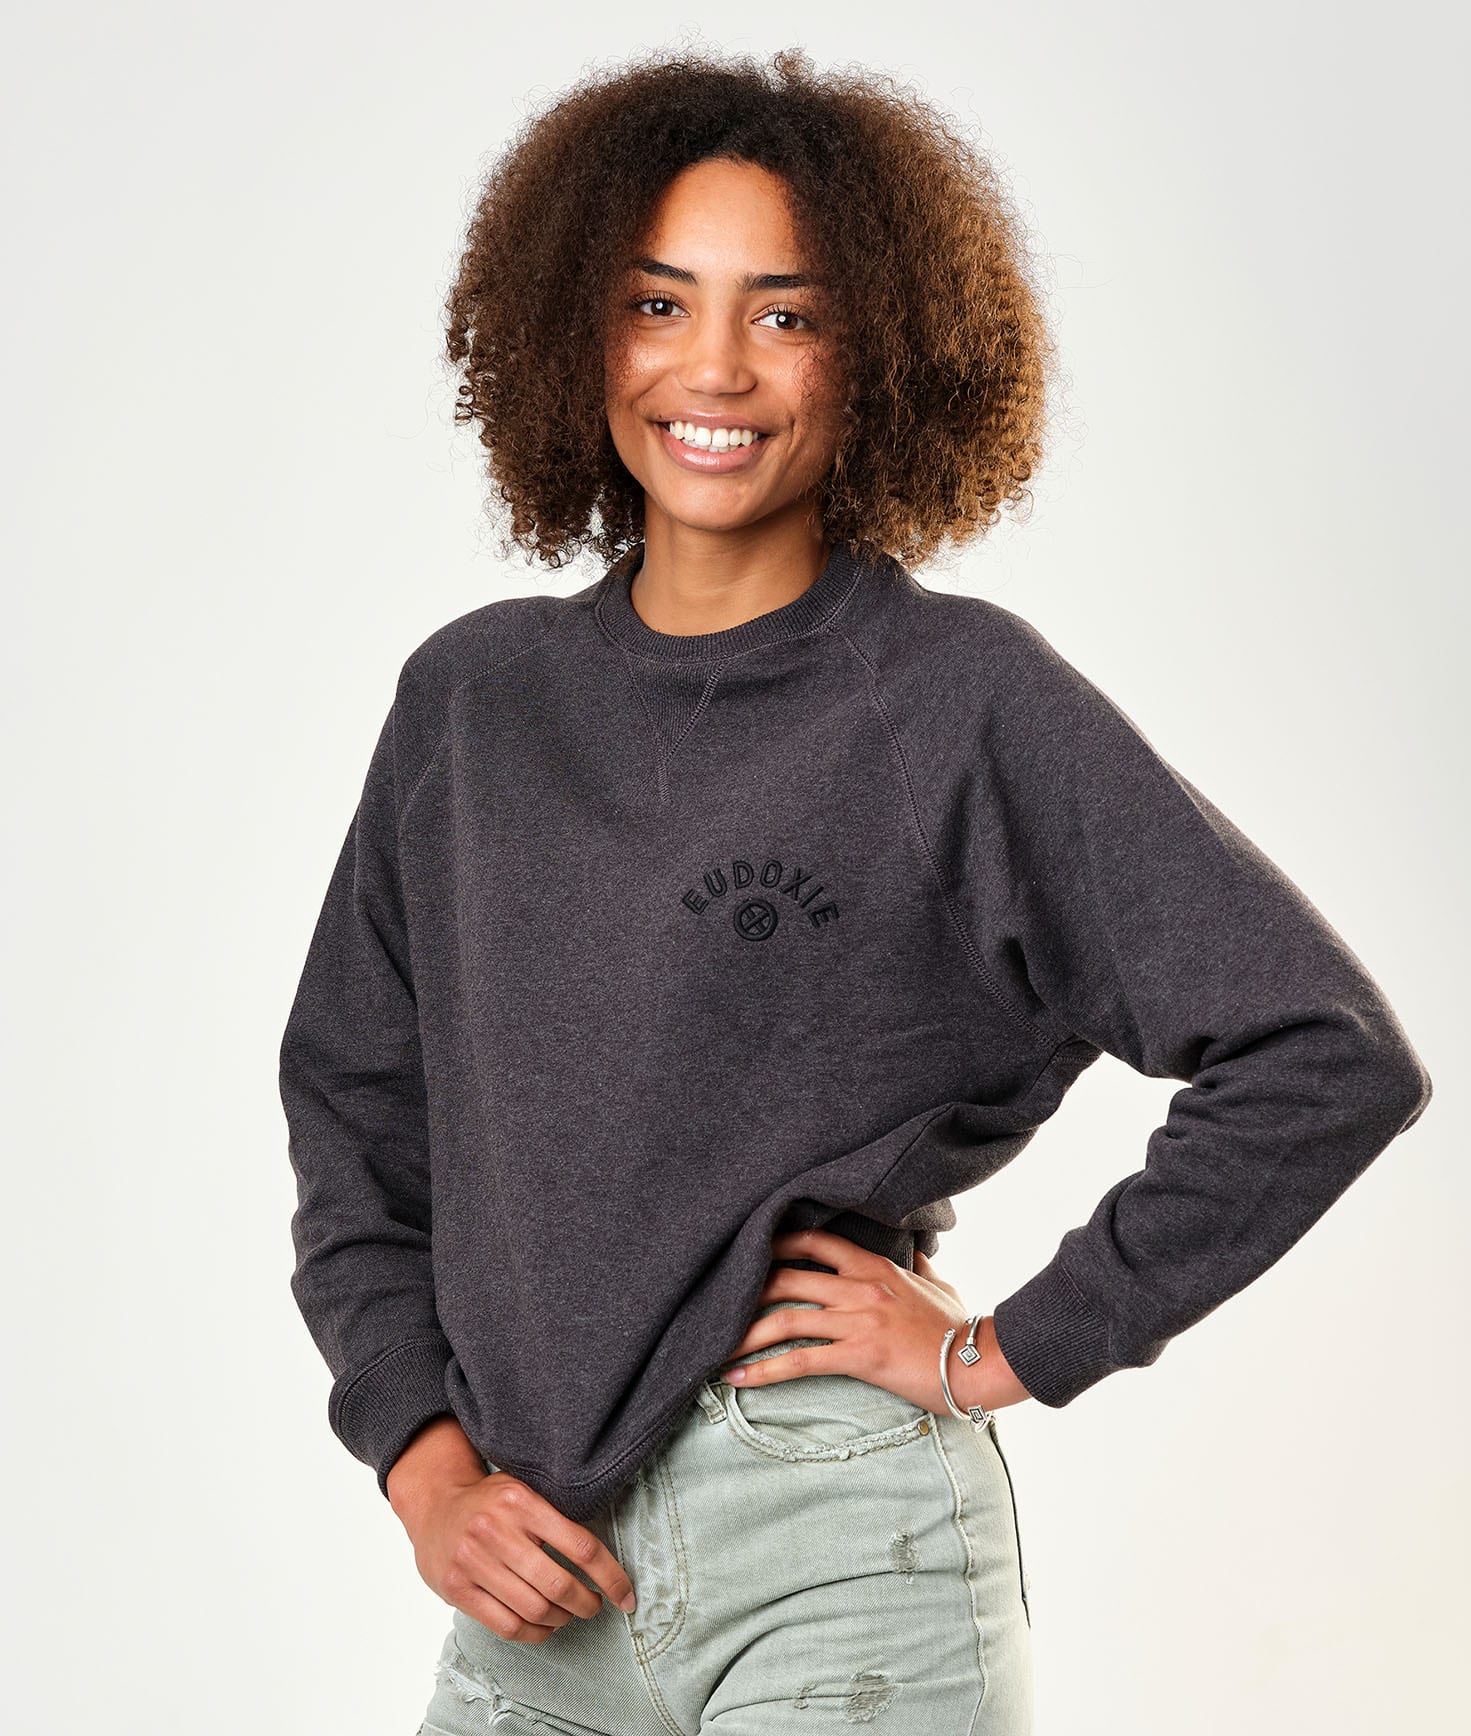 Eudoxie "Bonnie" Embroidered Sweatshirt - ExtraLarge - Bild 1